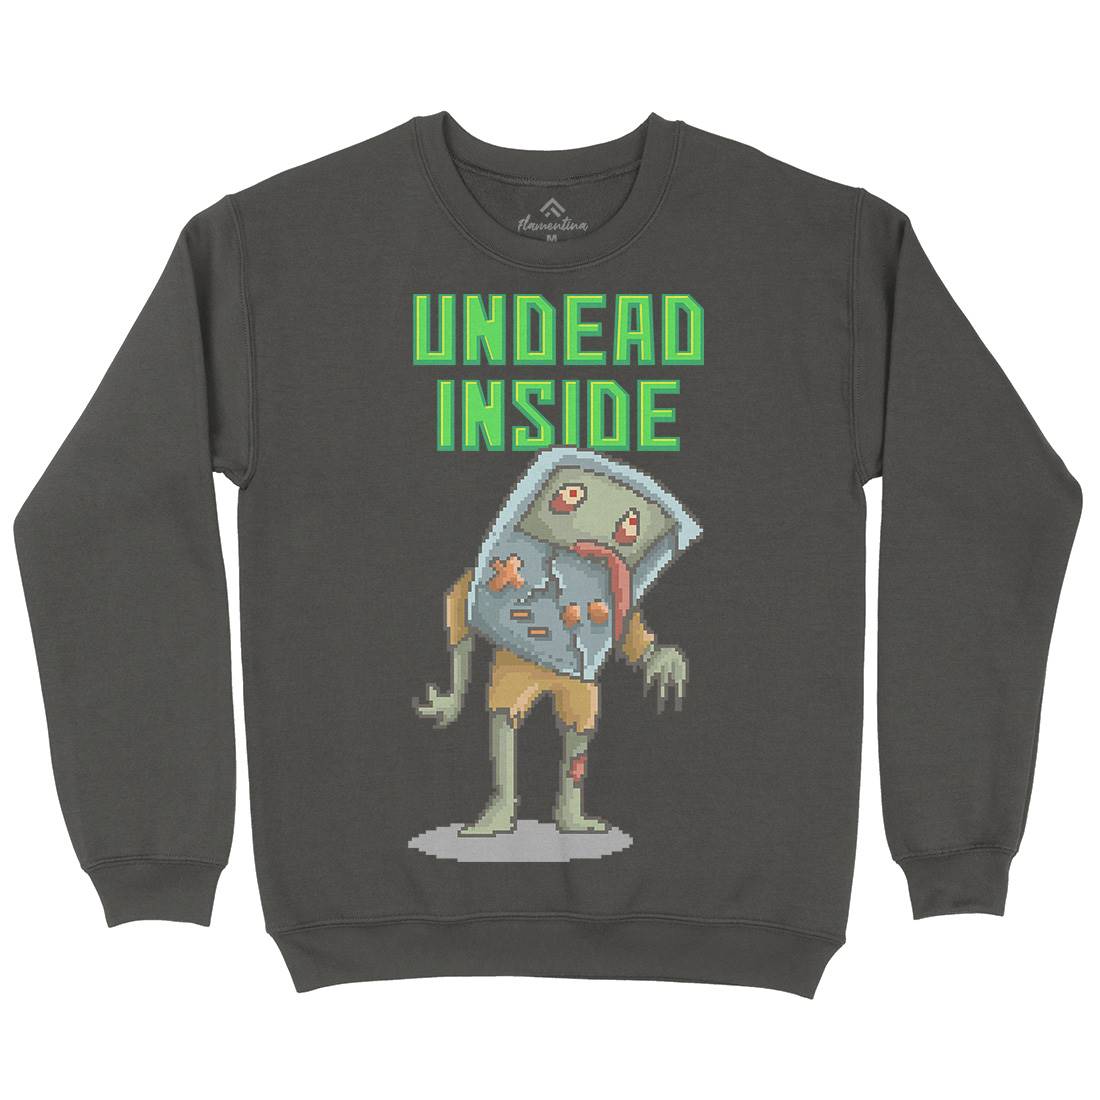 Undead Inside Kids Crew Neck Sweatshirt Geek B973